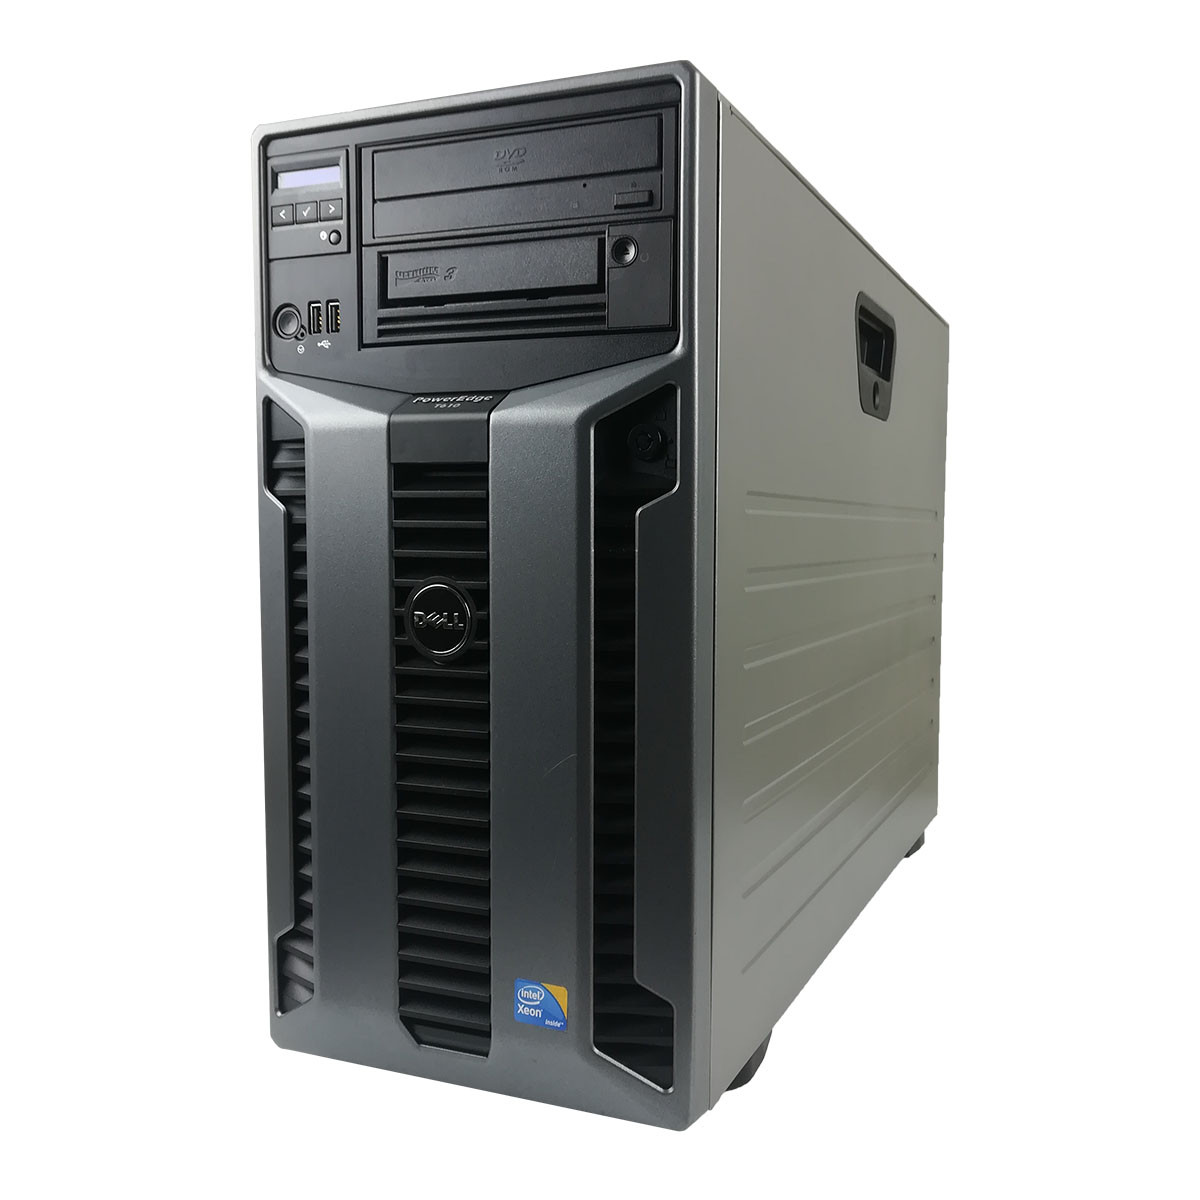 Server Dell PowerEdge T610 Tower, 2 x Intel Xeon Hexa Core X5650 2.66GHz-3.06GHz, 48GB DDR3-ECC, Raid Perc 6i, 8 x HDD 146GB/15K SAS, DVD-ROM, Idrac 6 Enterprise, 2 PSU Hot Swap